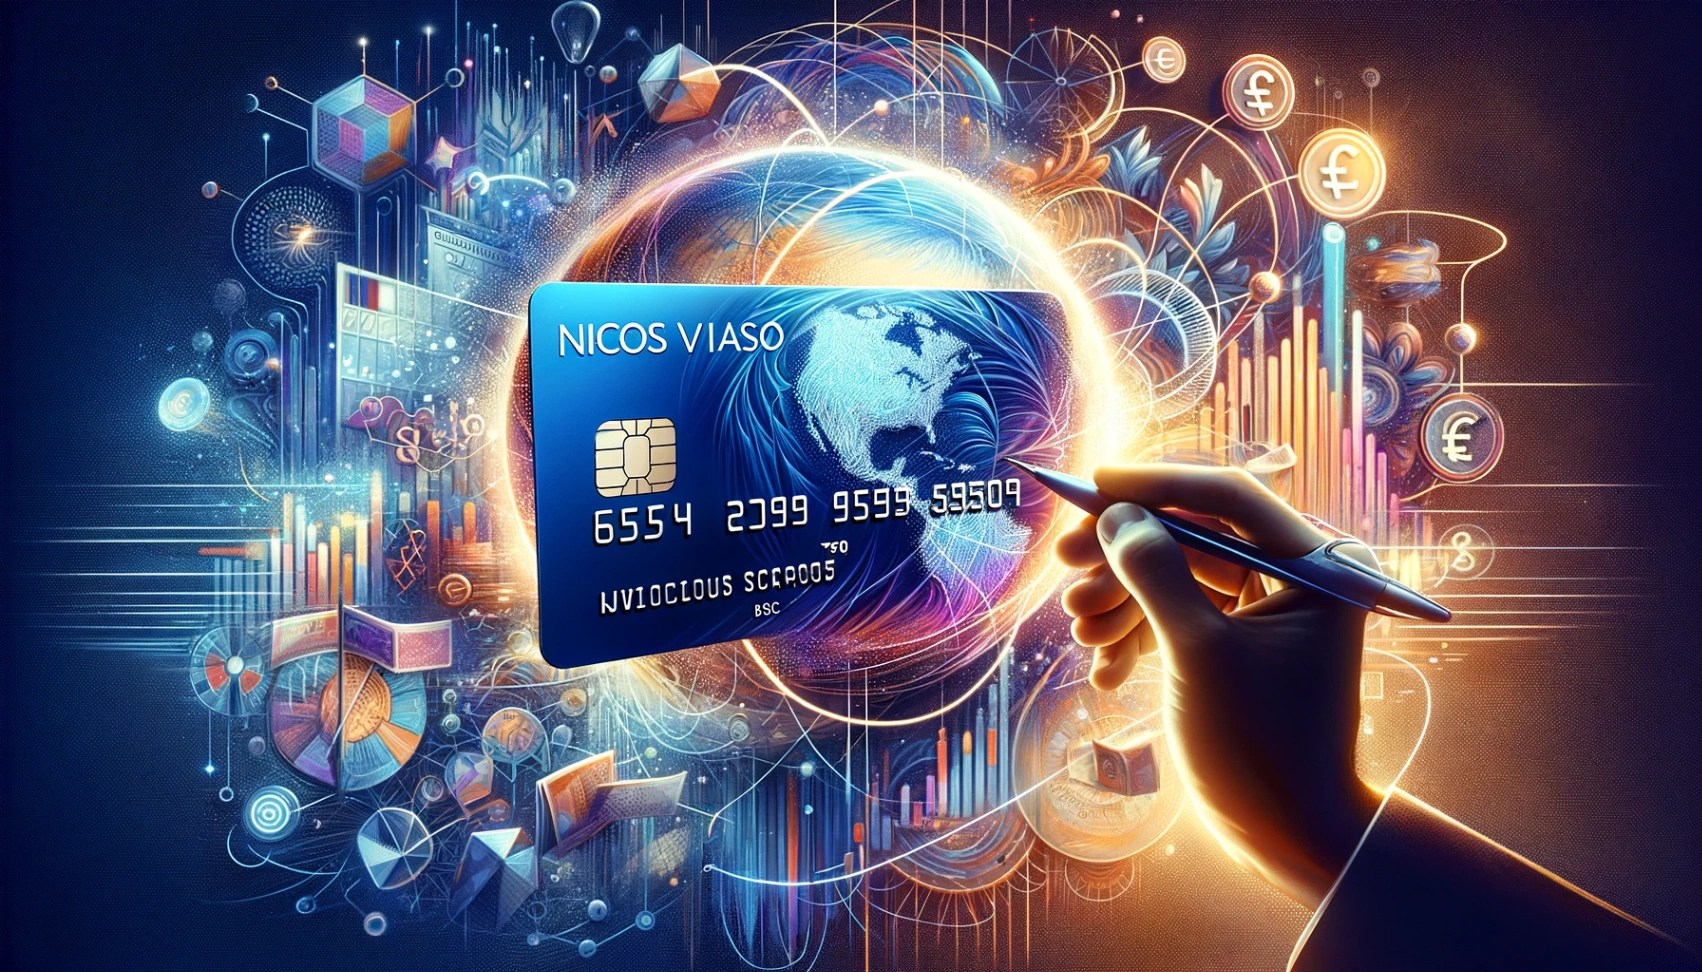 Nicos Viaso Card: Easy Online Application Steps